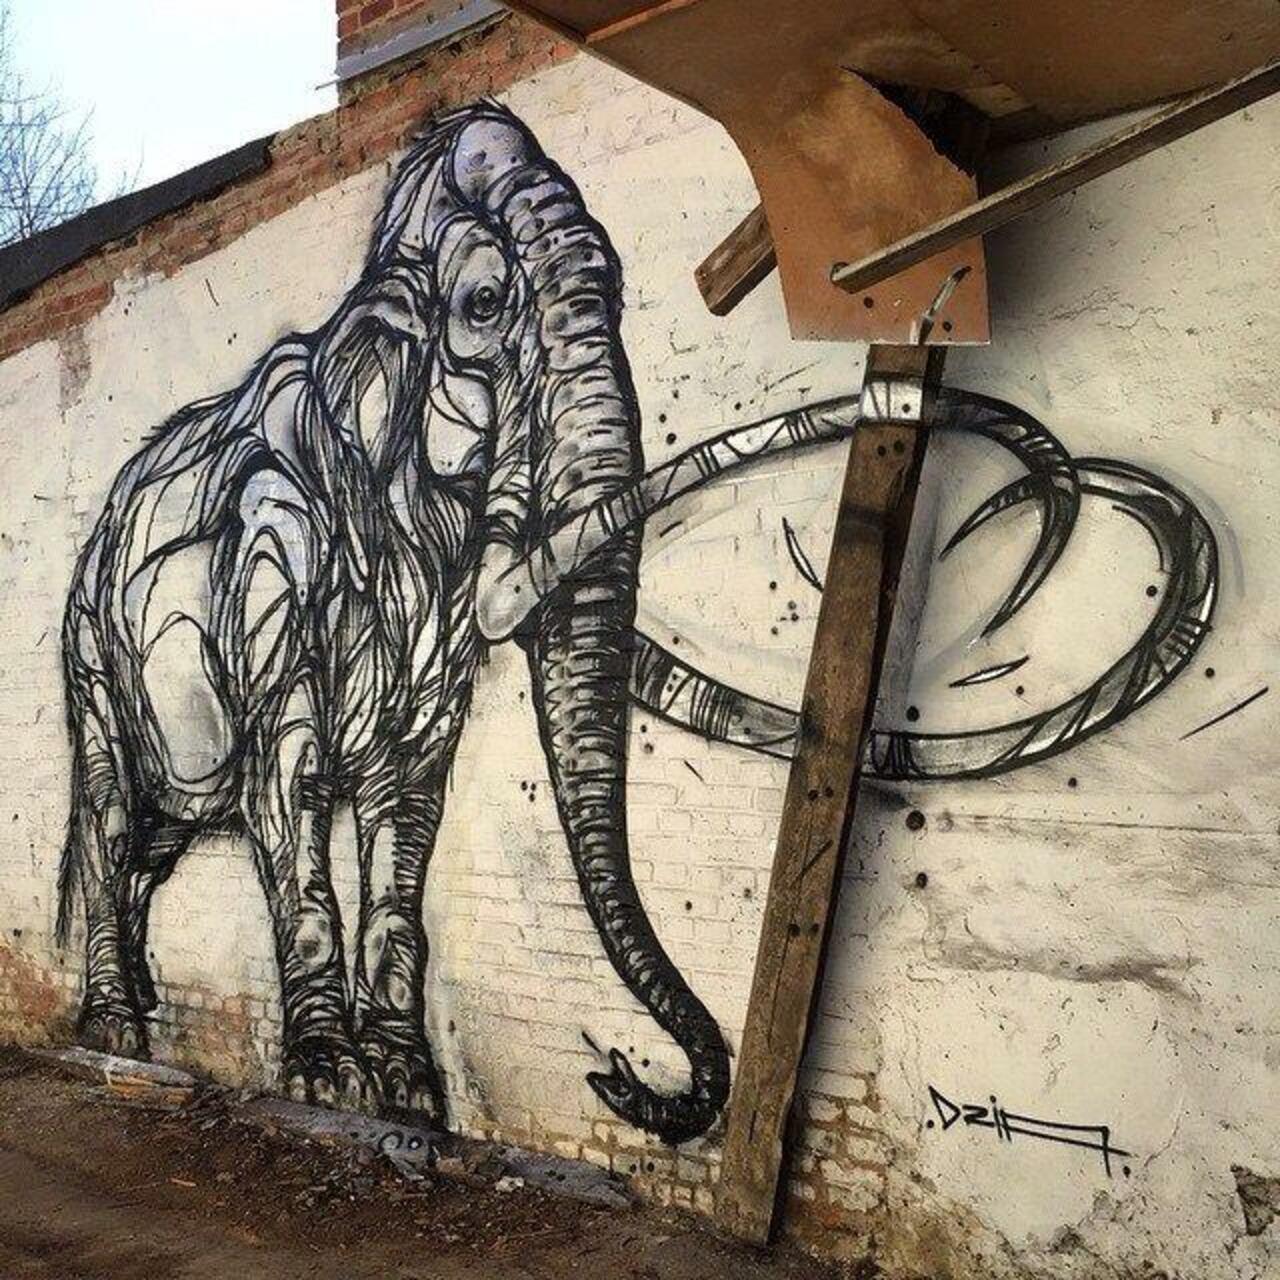 Mammoth. New nature in Street Art wall by DZIA 

#art #graffiti #mural #streetart http://t.co/8234yYNK4U